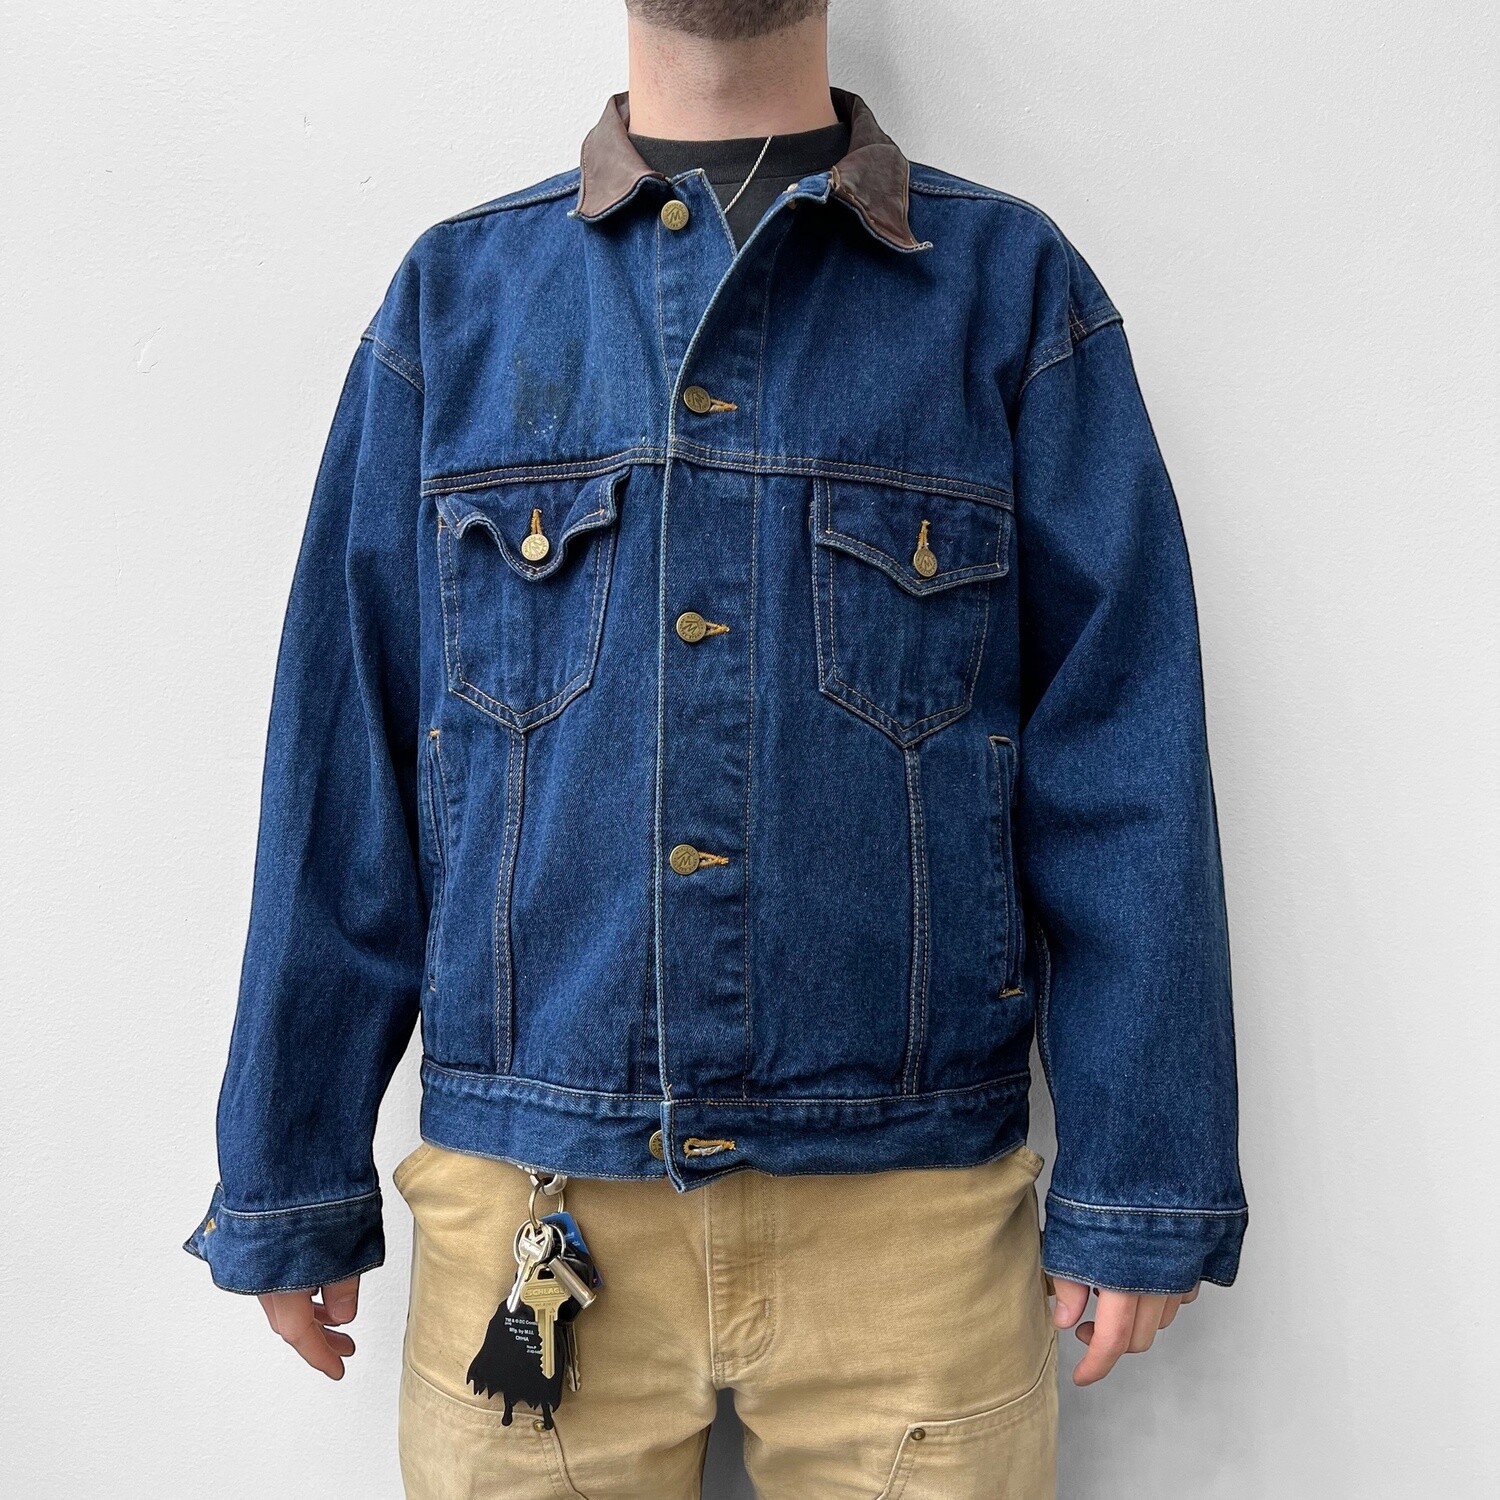 Marlboro Country Store Denim Jacket, Size: XL, Color: Blue, Style: Jean Jacket